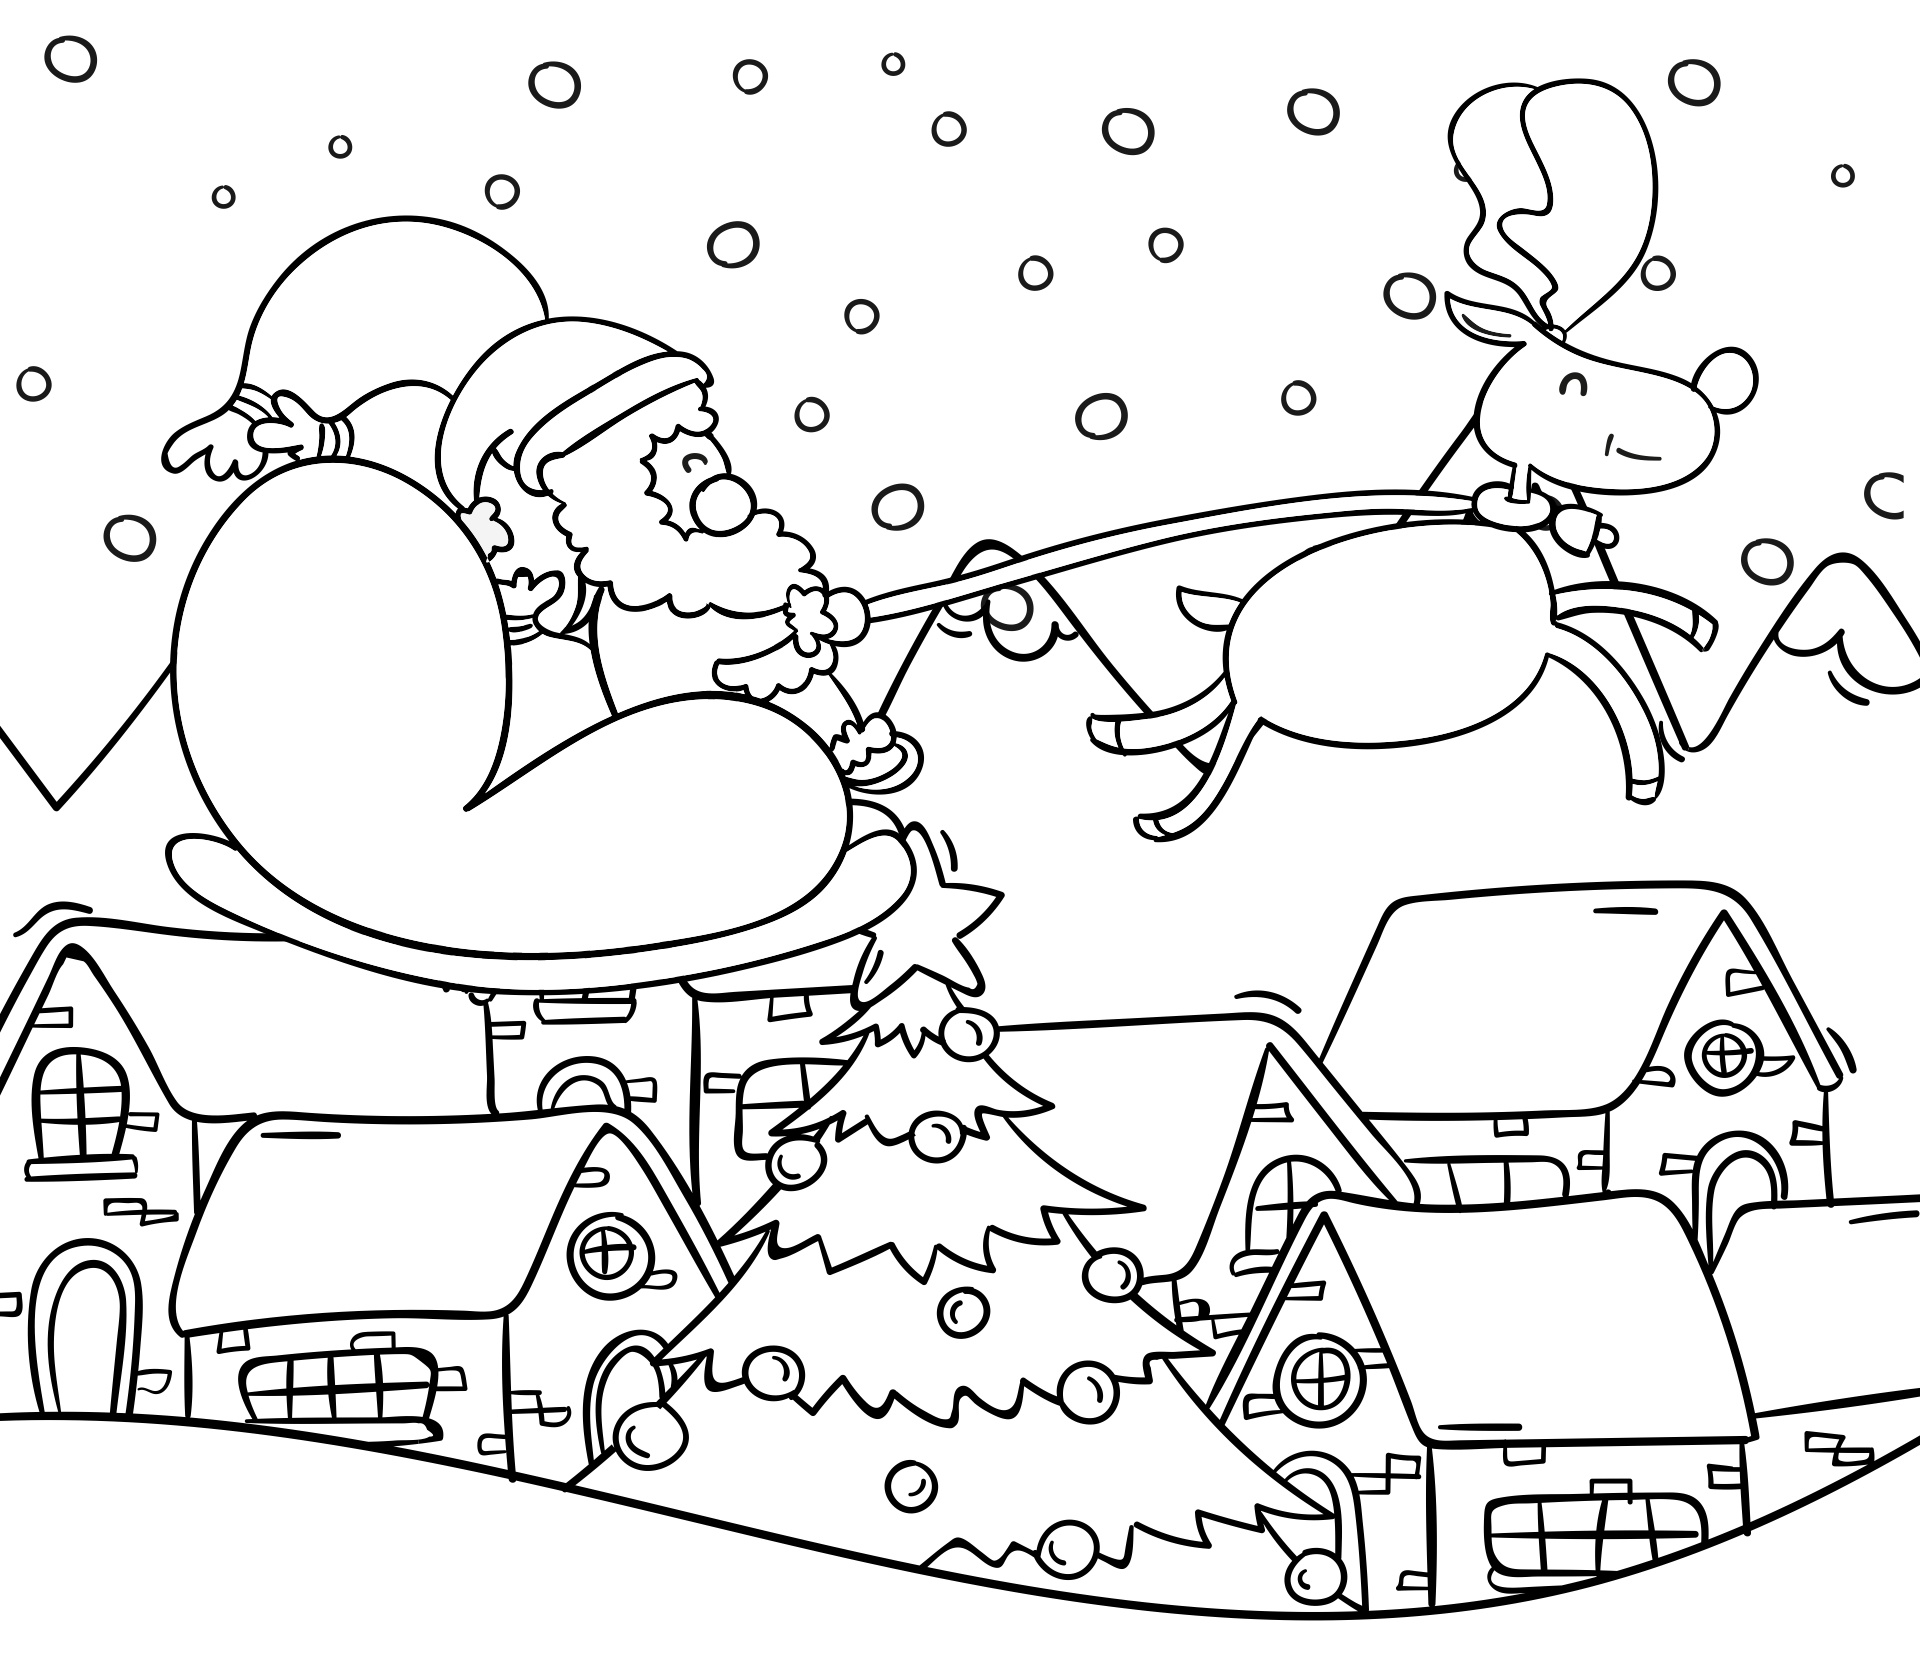 Santa Claus In Sleigh Pulled By Reindeer Coloring Page Printable